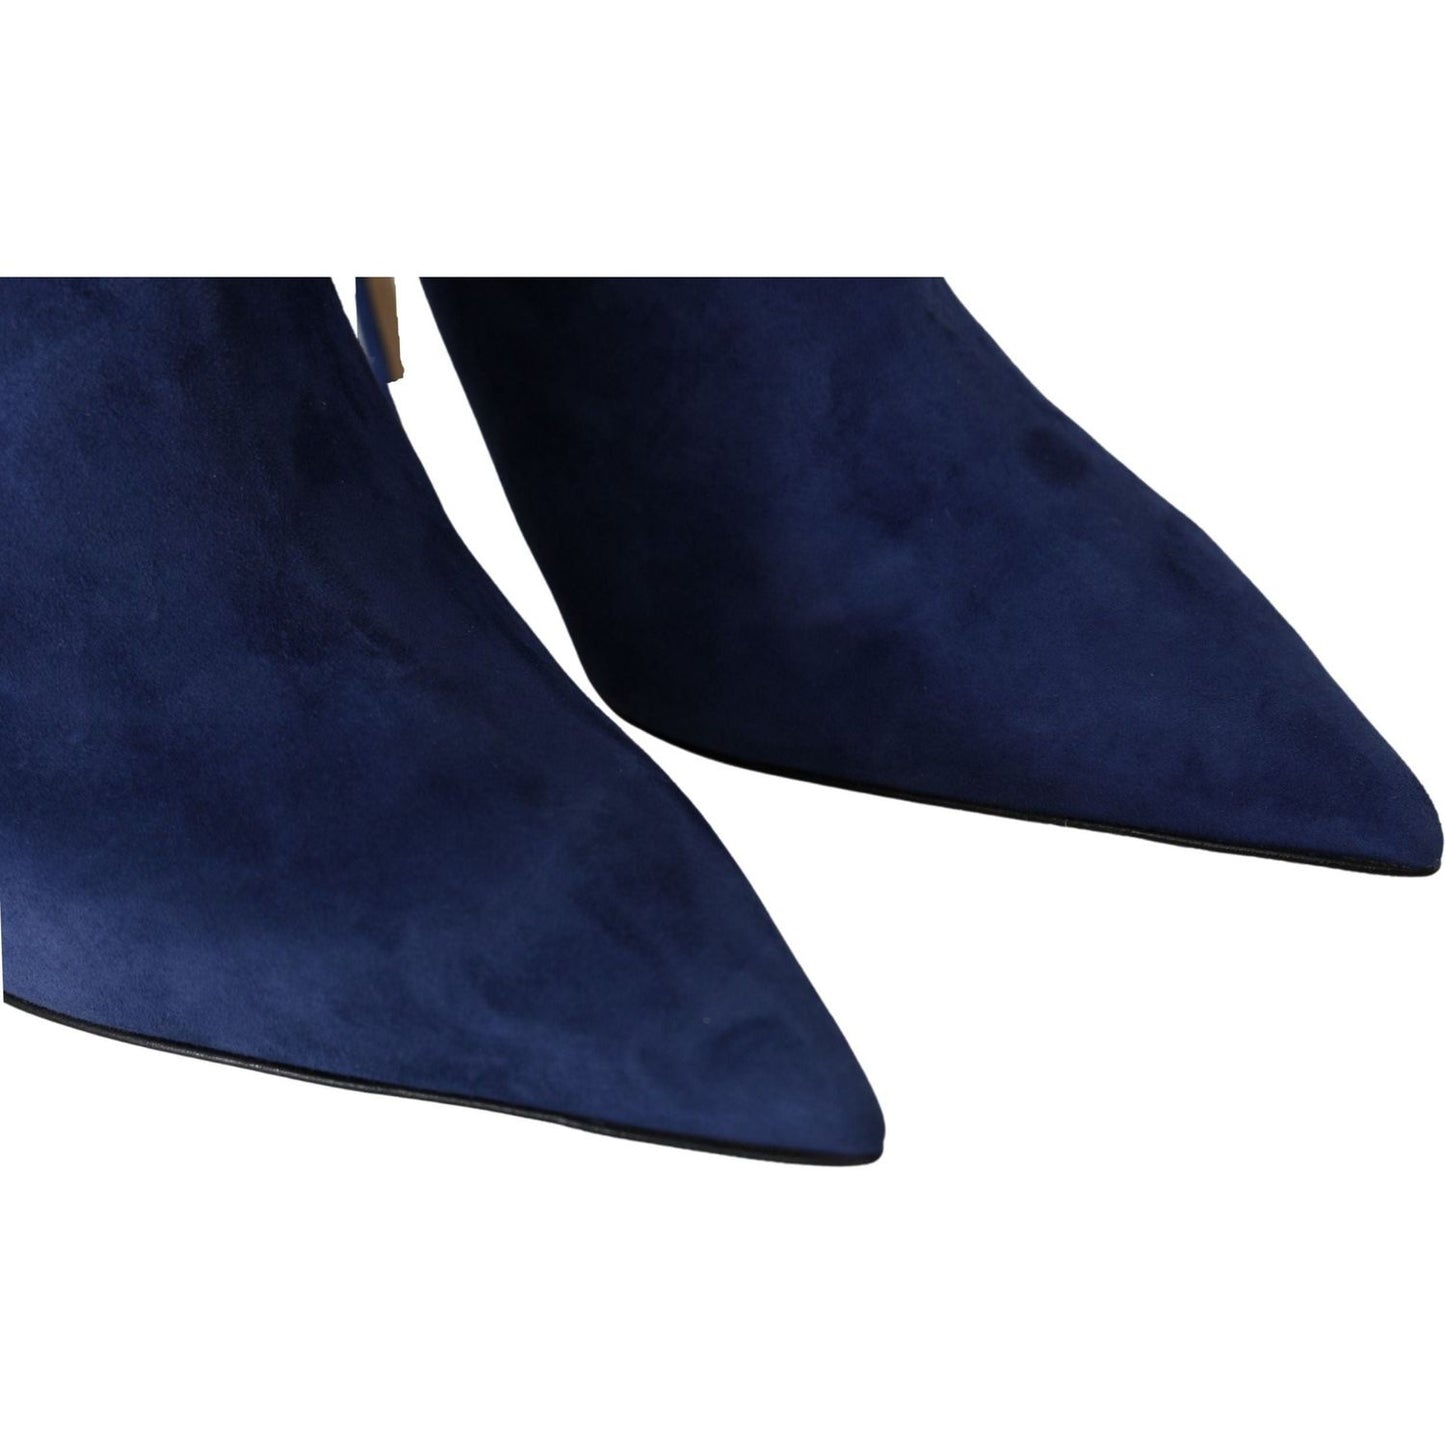 Jimmy Choo Pop Blue Crystal-Strap Heeled Boots blaize-100-pop-blue-leather-boots IMG_2732-scaled-7e698990-00e.jpg